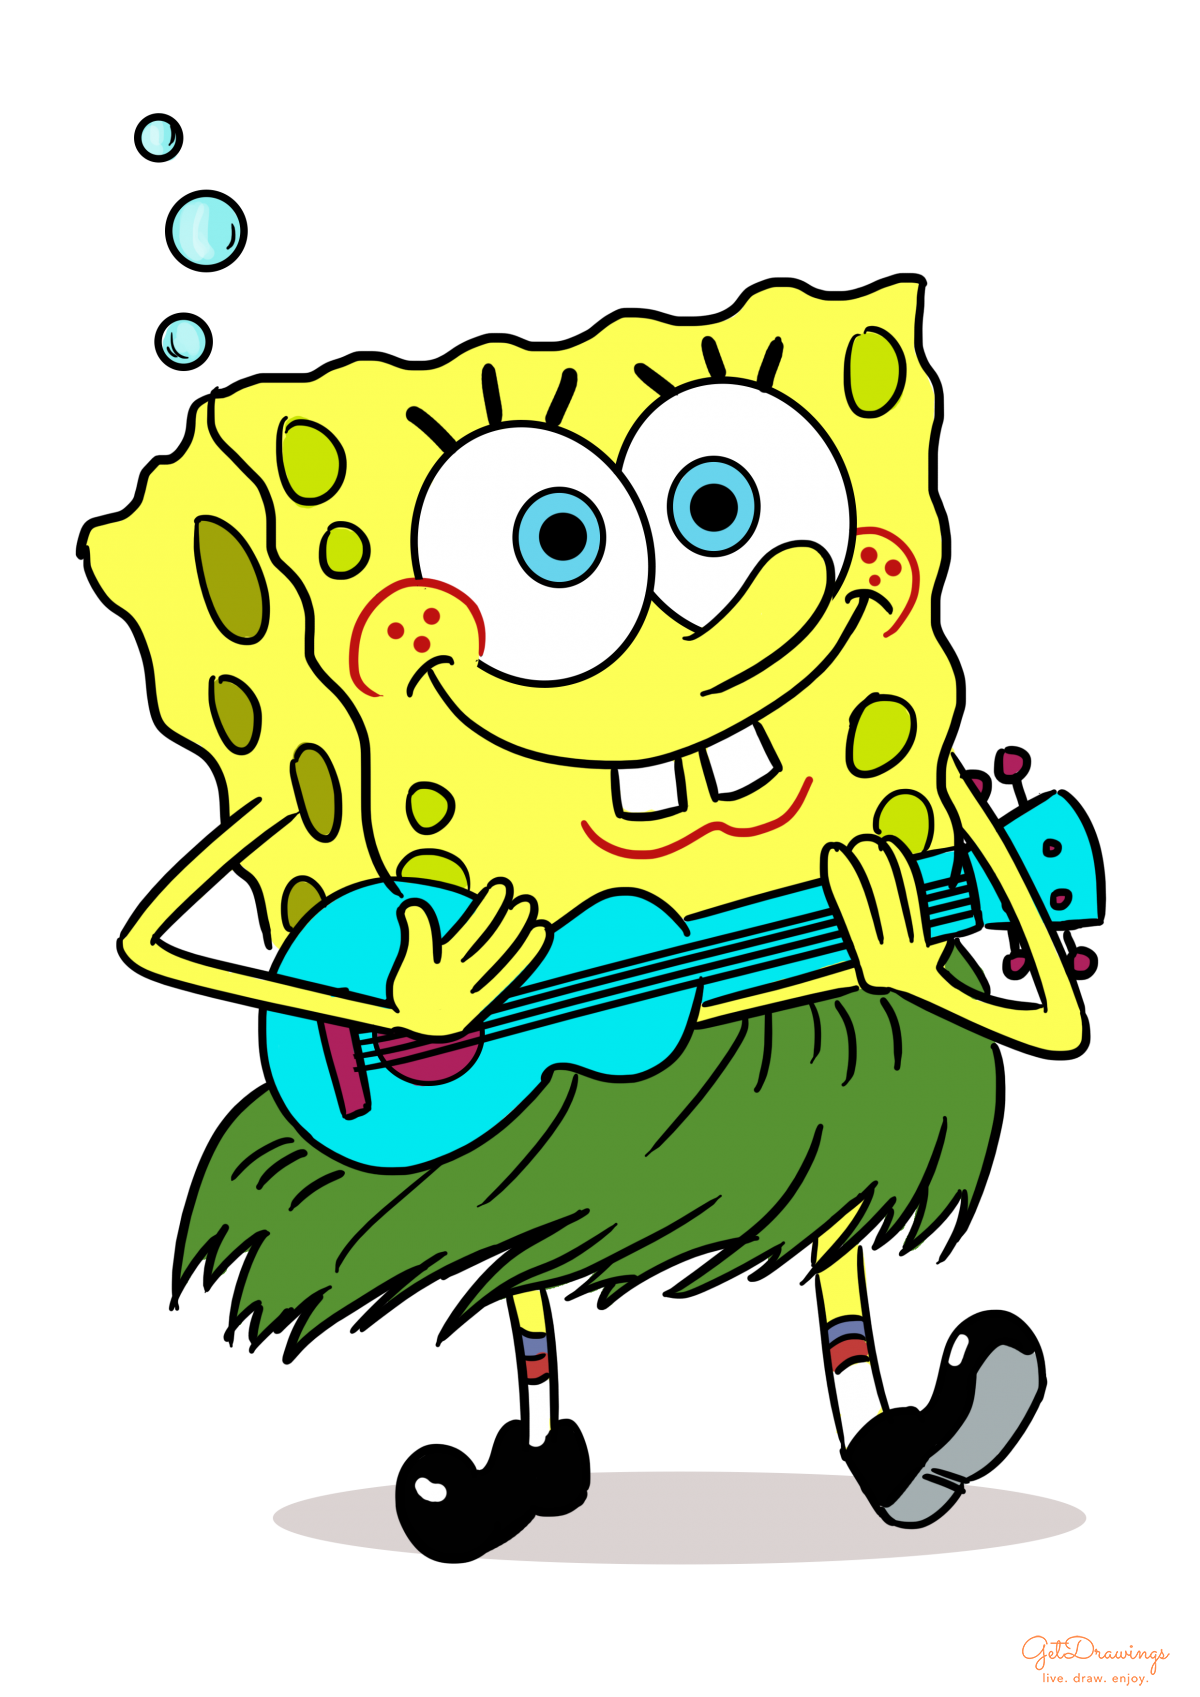 Spongebob Squarepants Cartoon Drawings | Images and Photos finder